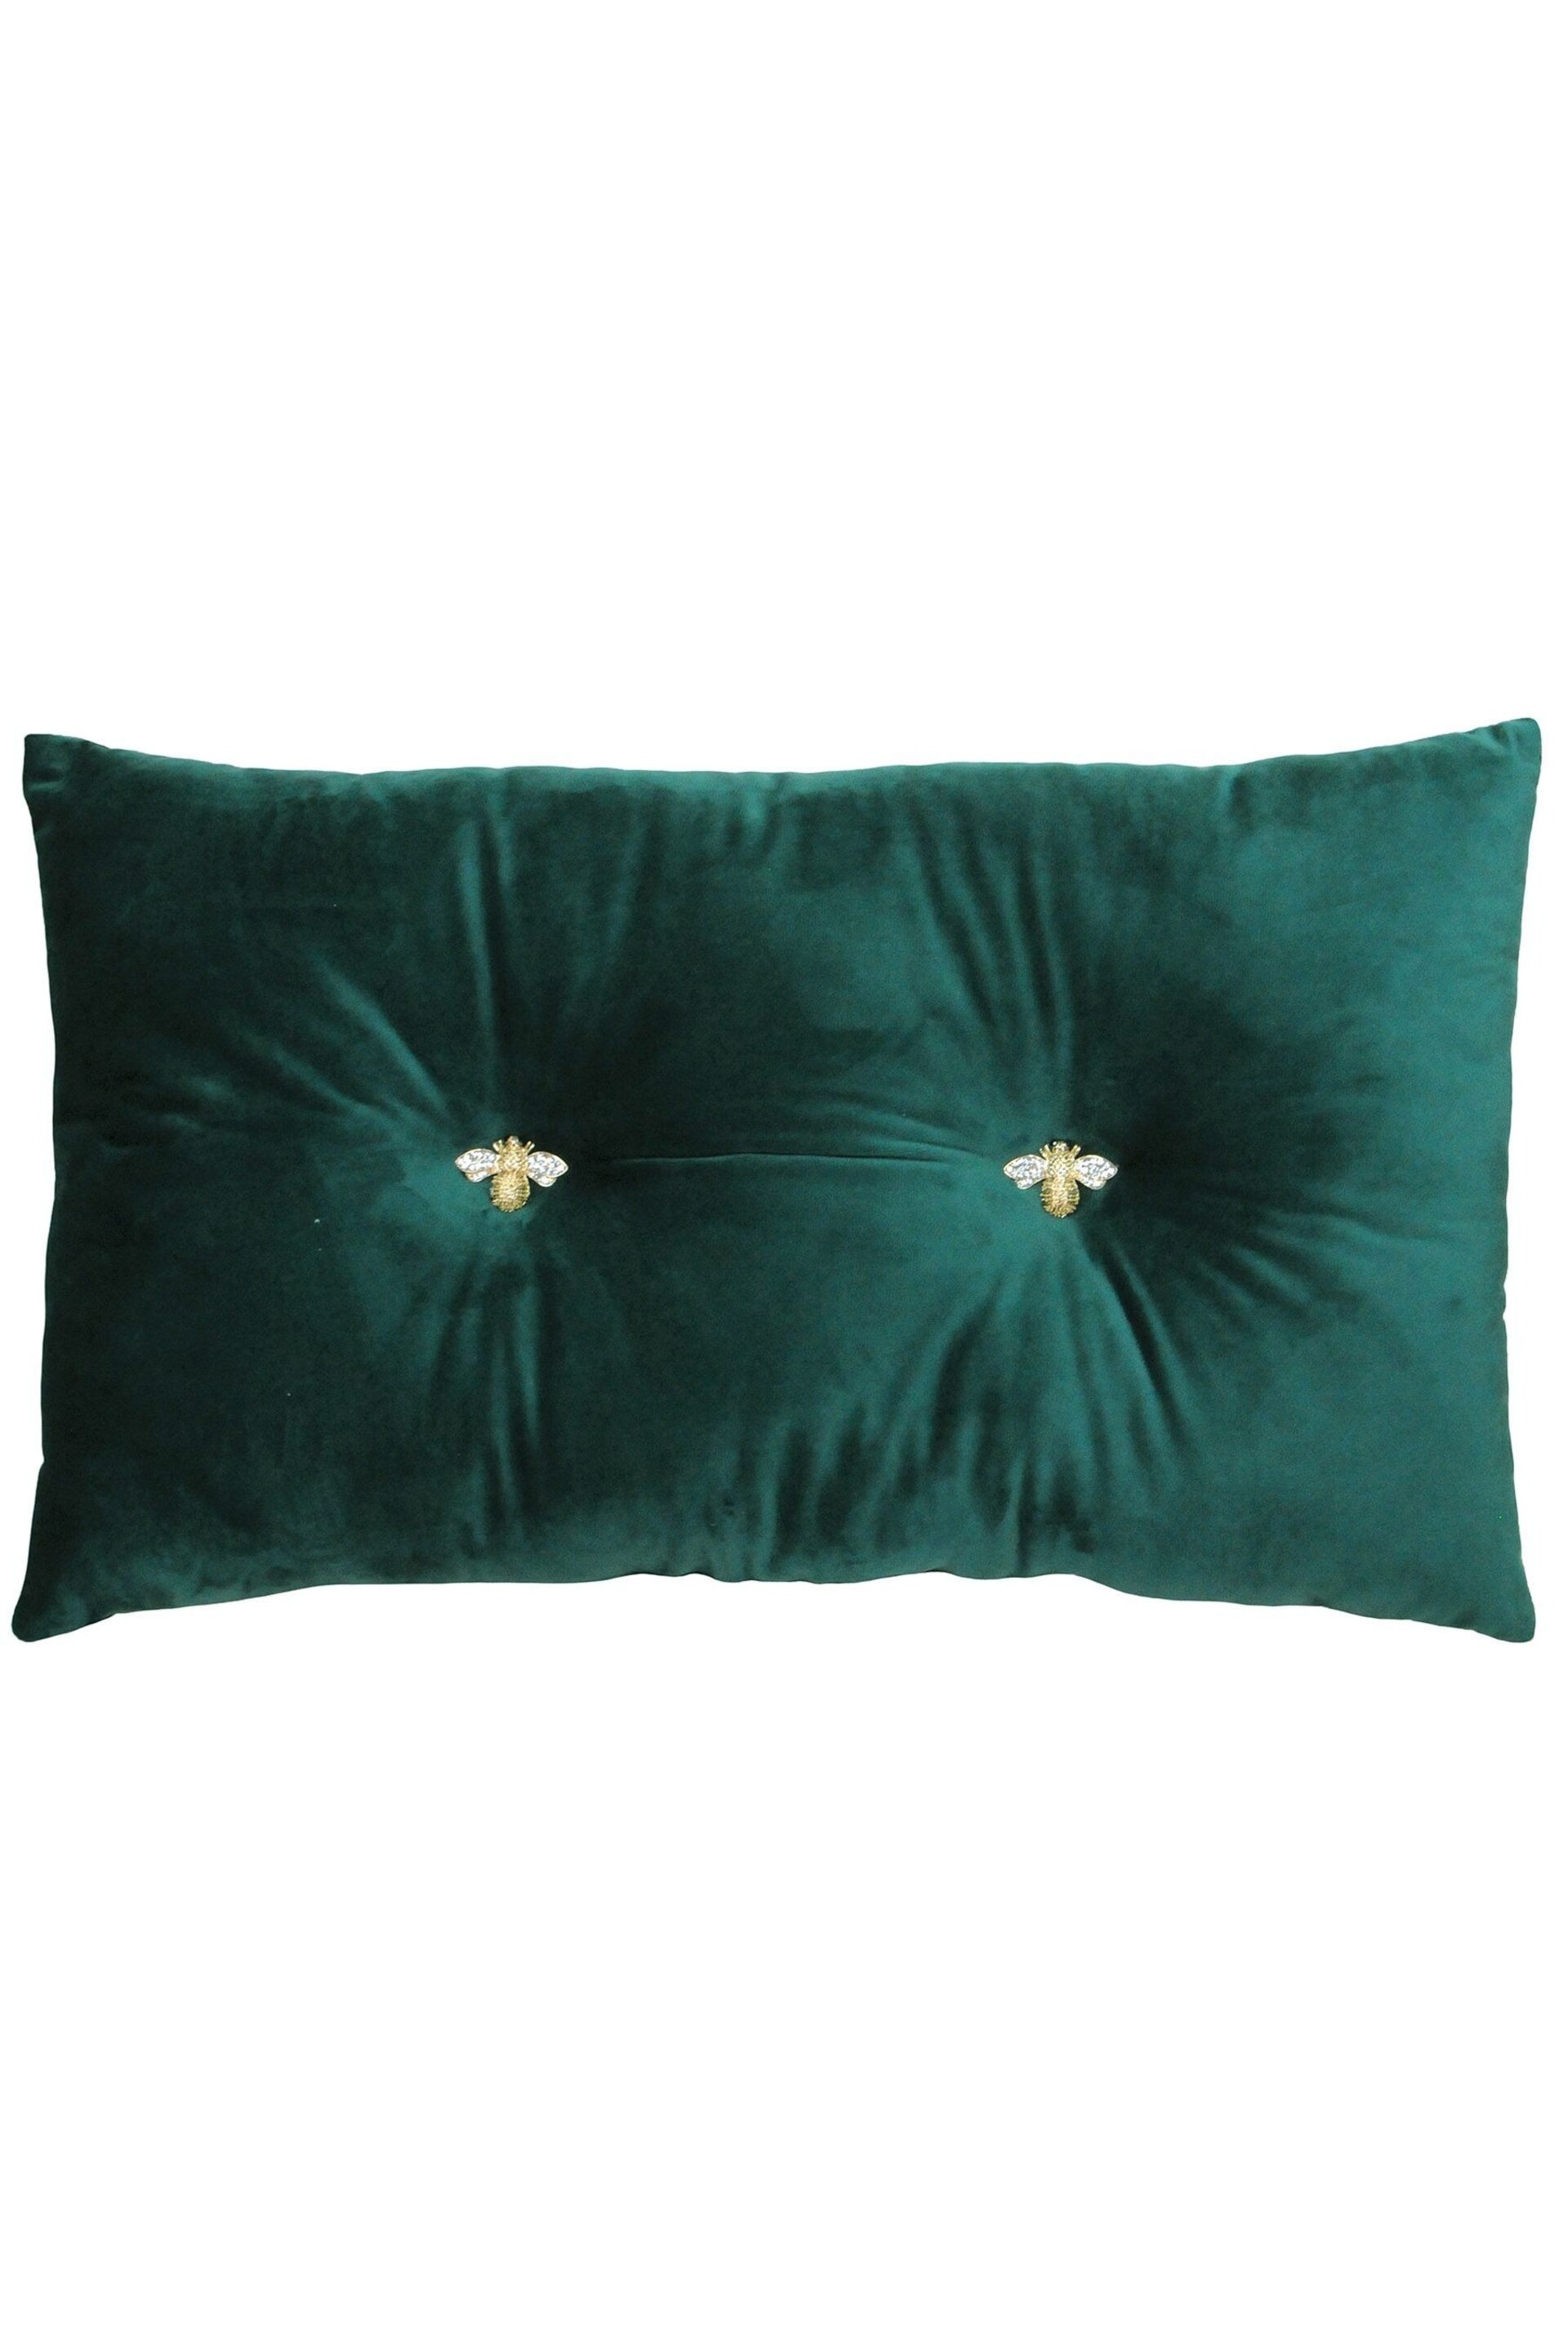 Riva Paoletti Emerald Green Bumble Cushion - Image 1 of 2